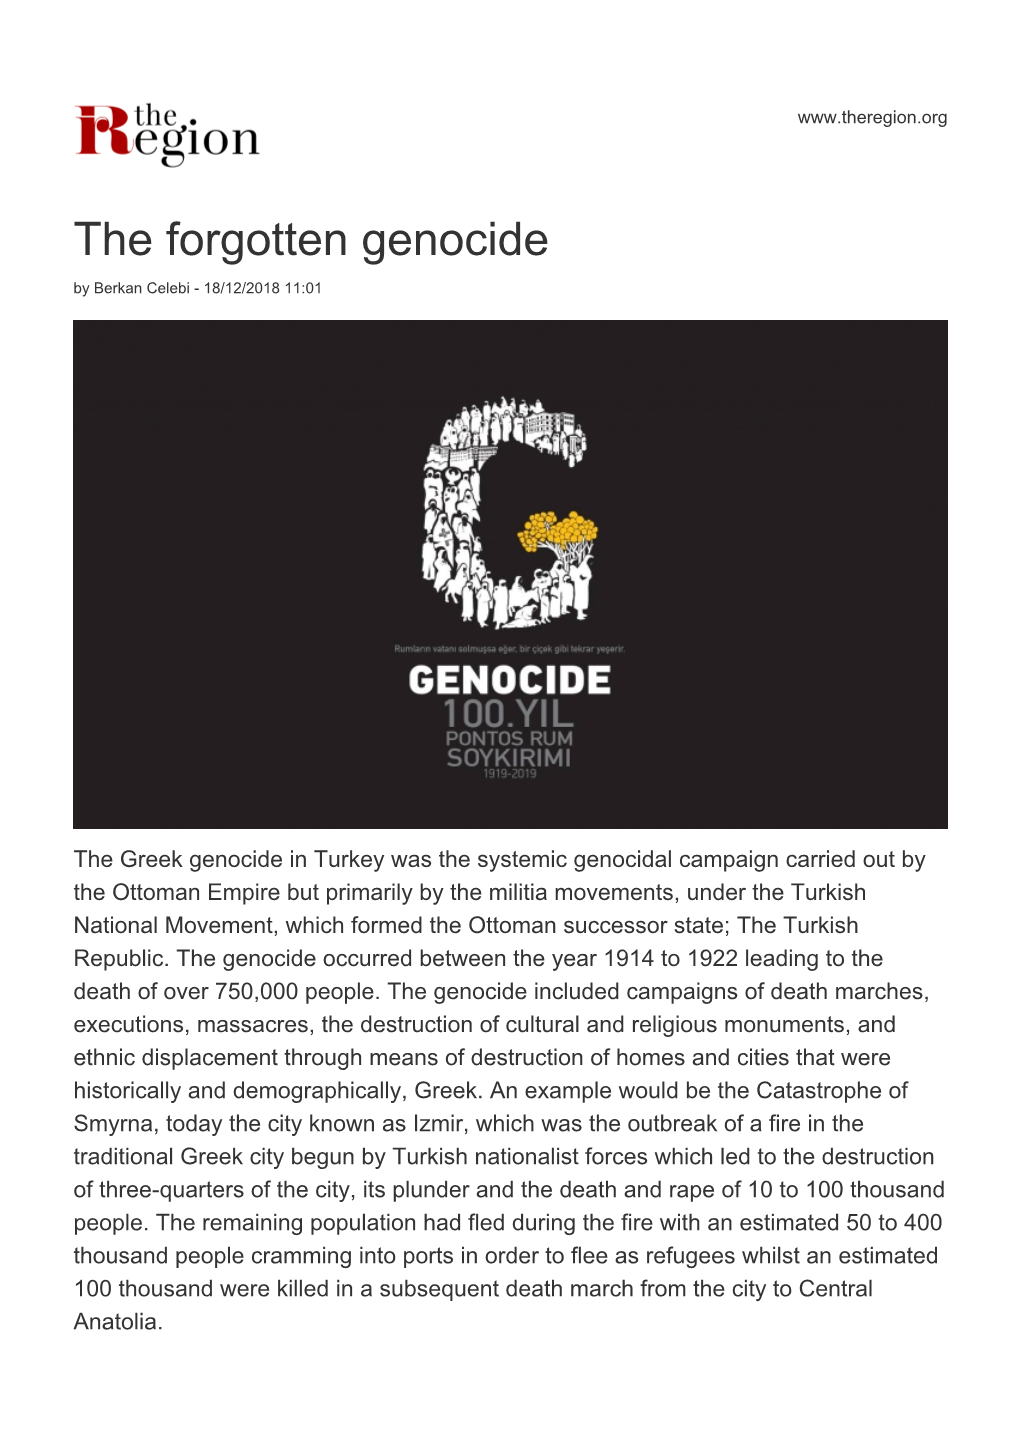 The Forgotten Genocide by Berkan Celebi - 18/12/2018 11:01